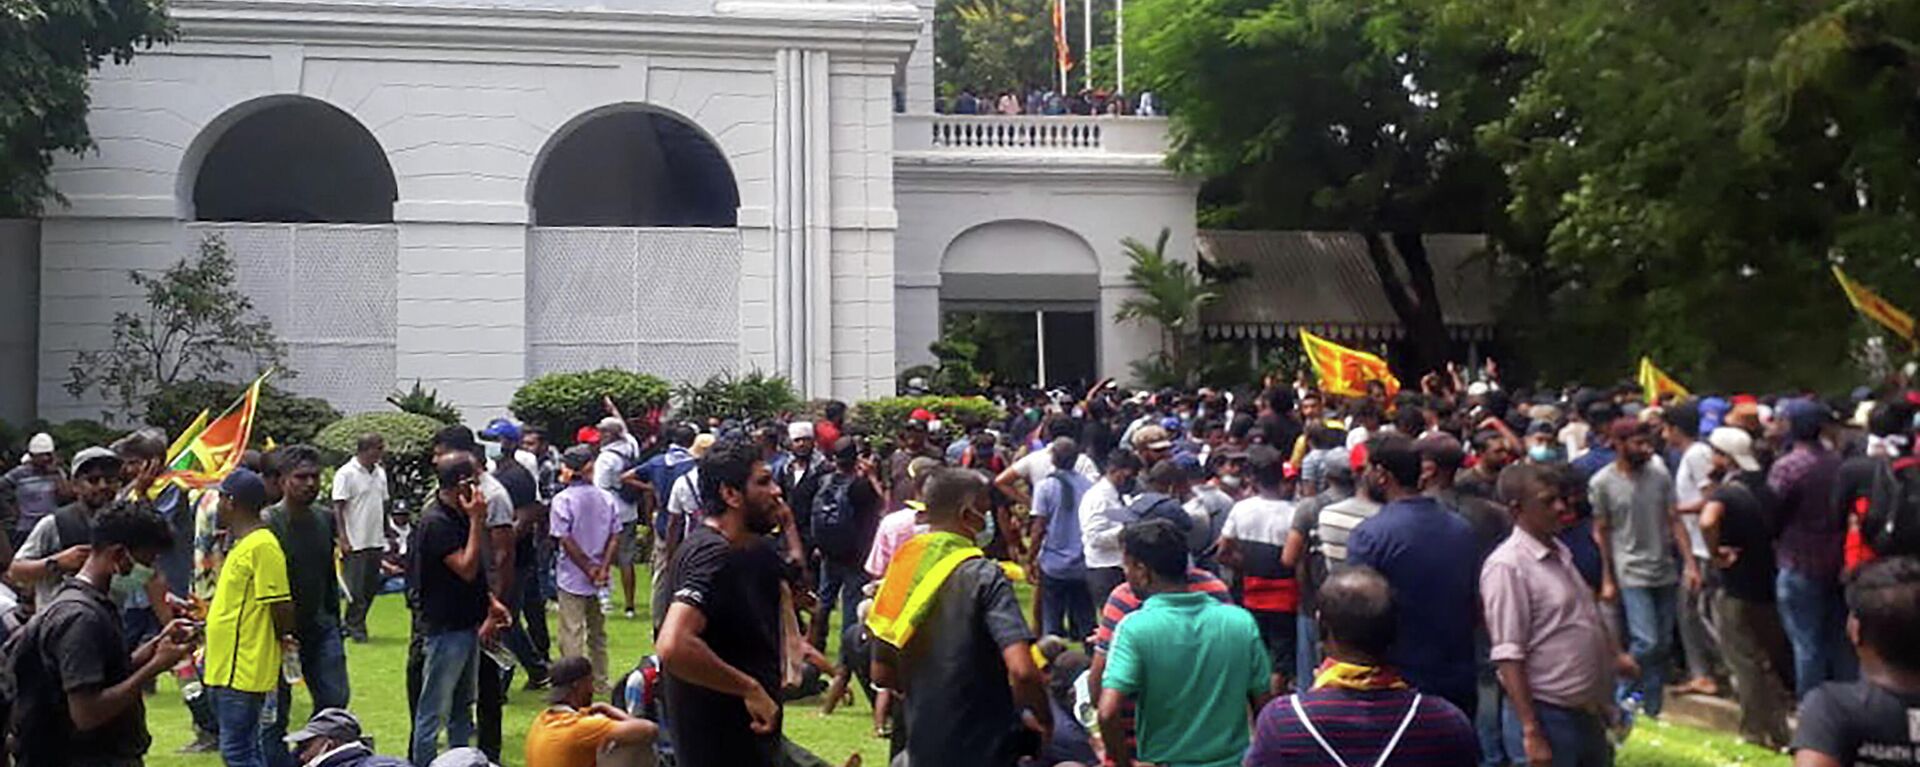 Протестующие собираются на территории президентского дворца Шри-Ланки в Коломбо - Sputnik Кыргызстан, 1920, 09.07.2022